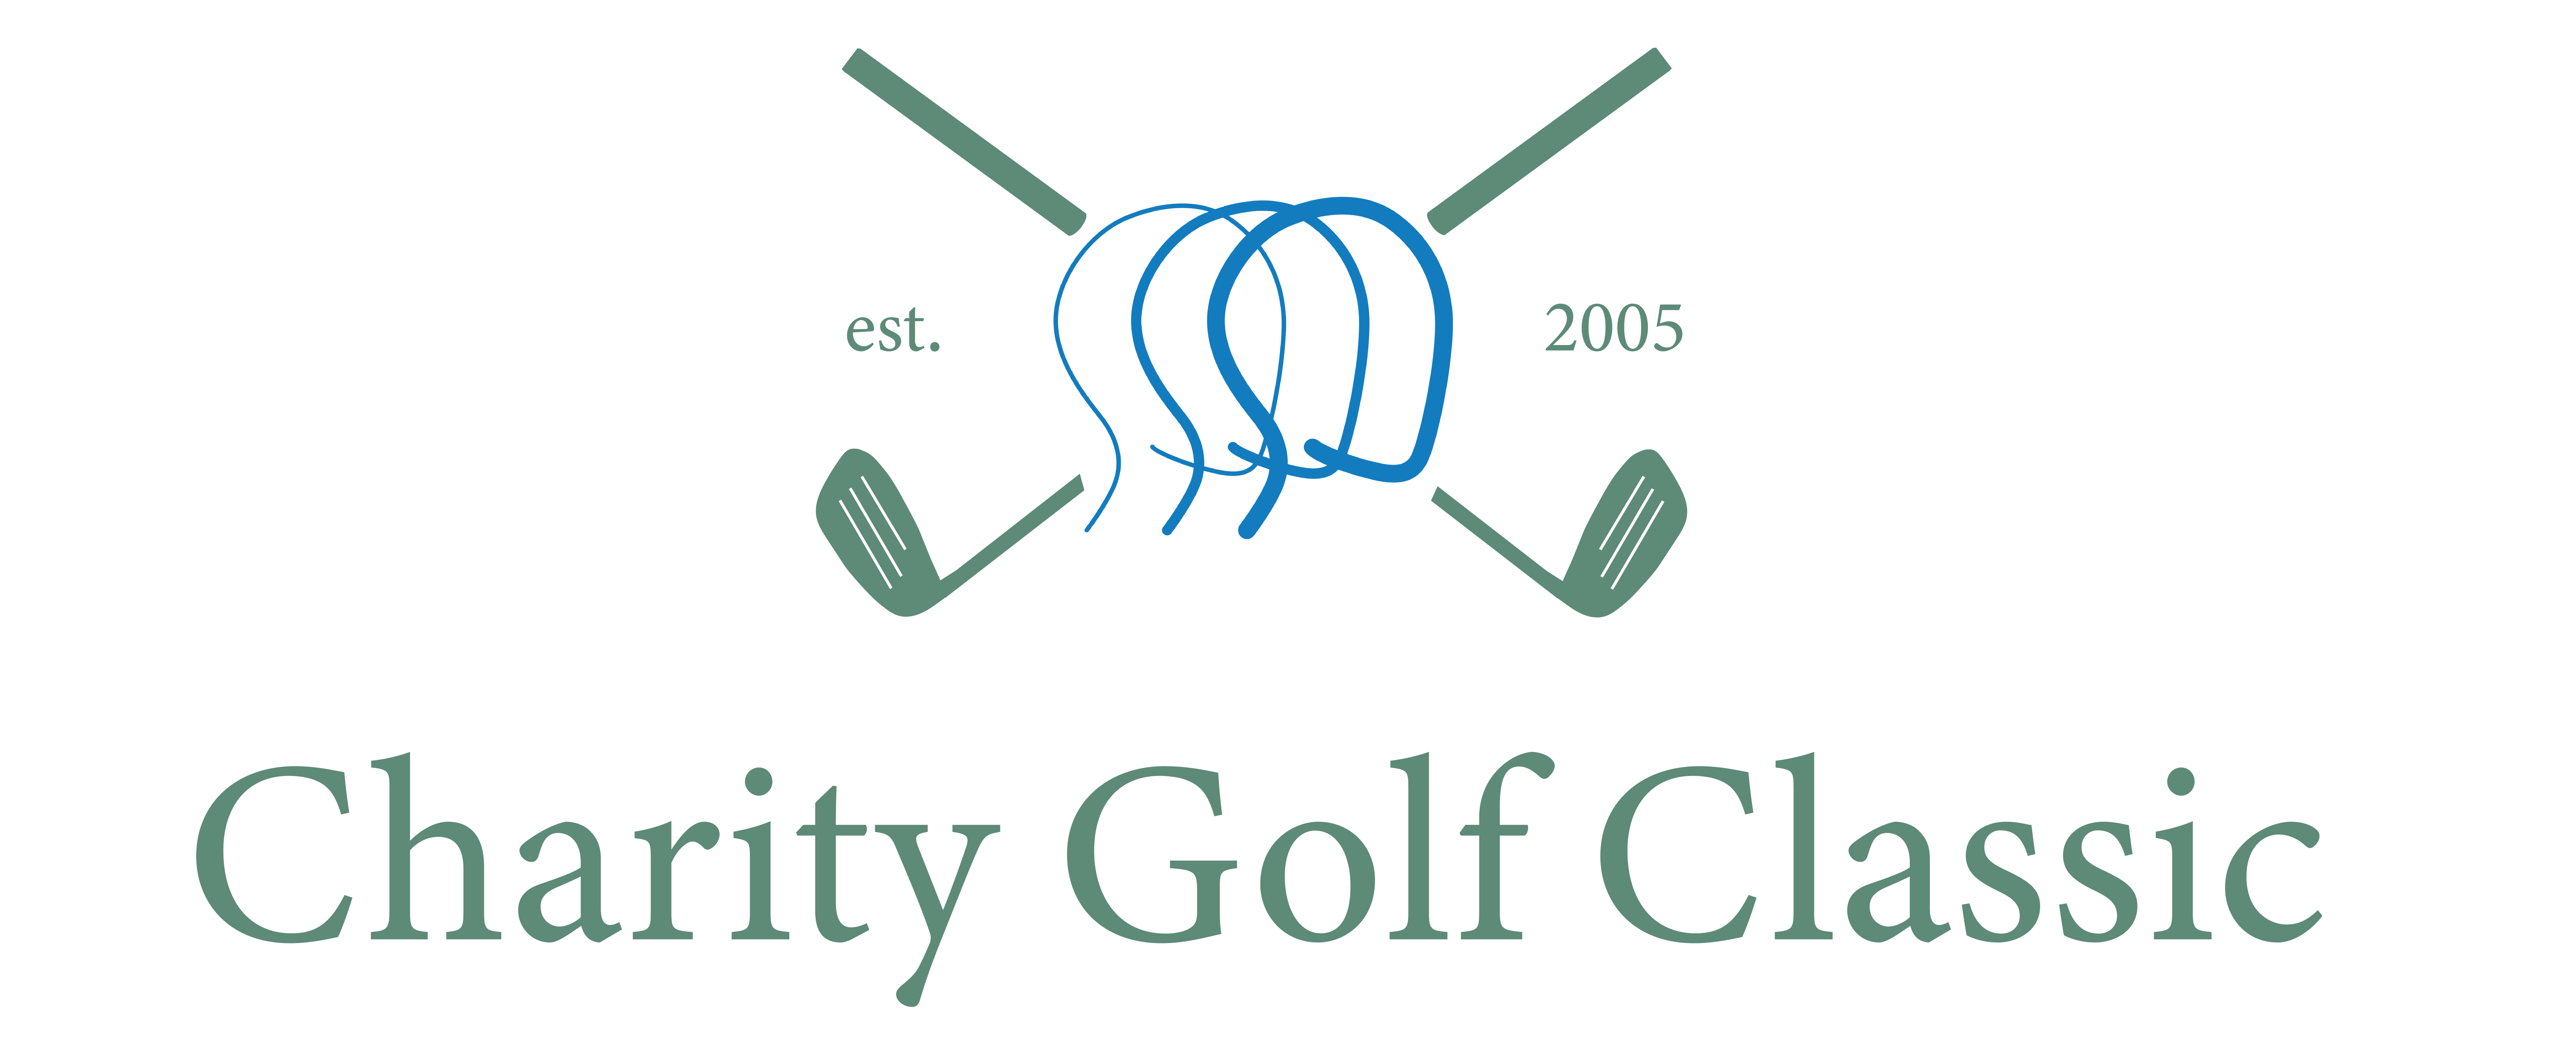 Golf Classic Logo Full